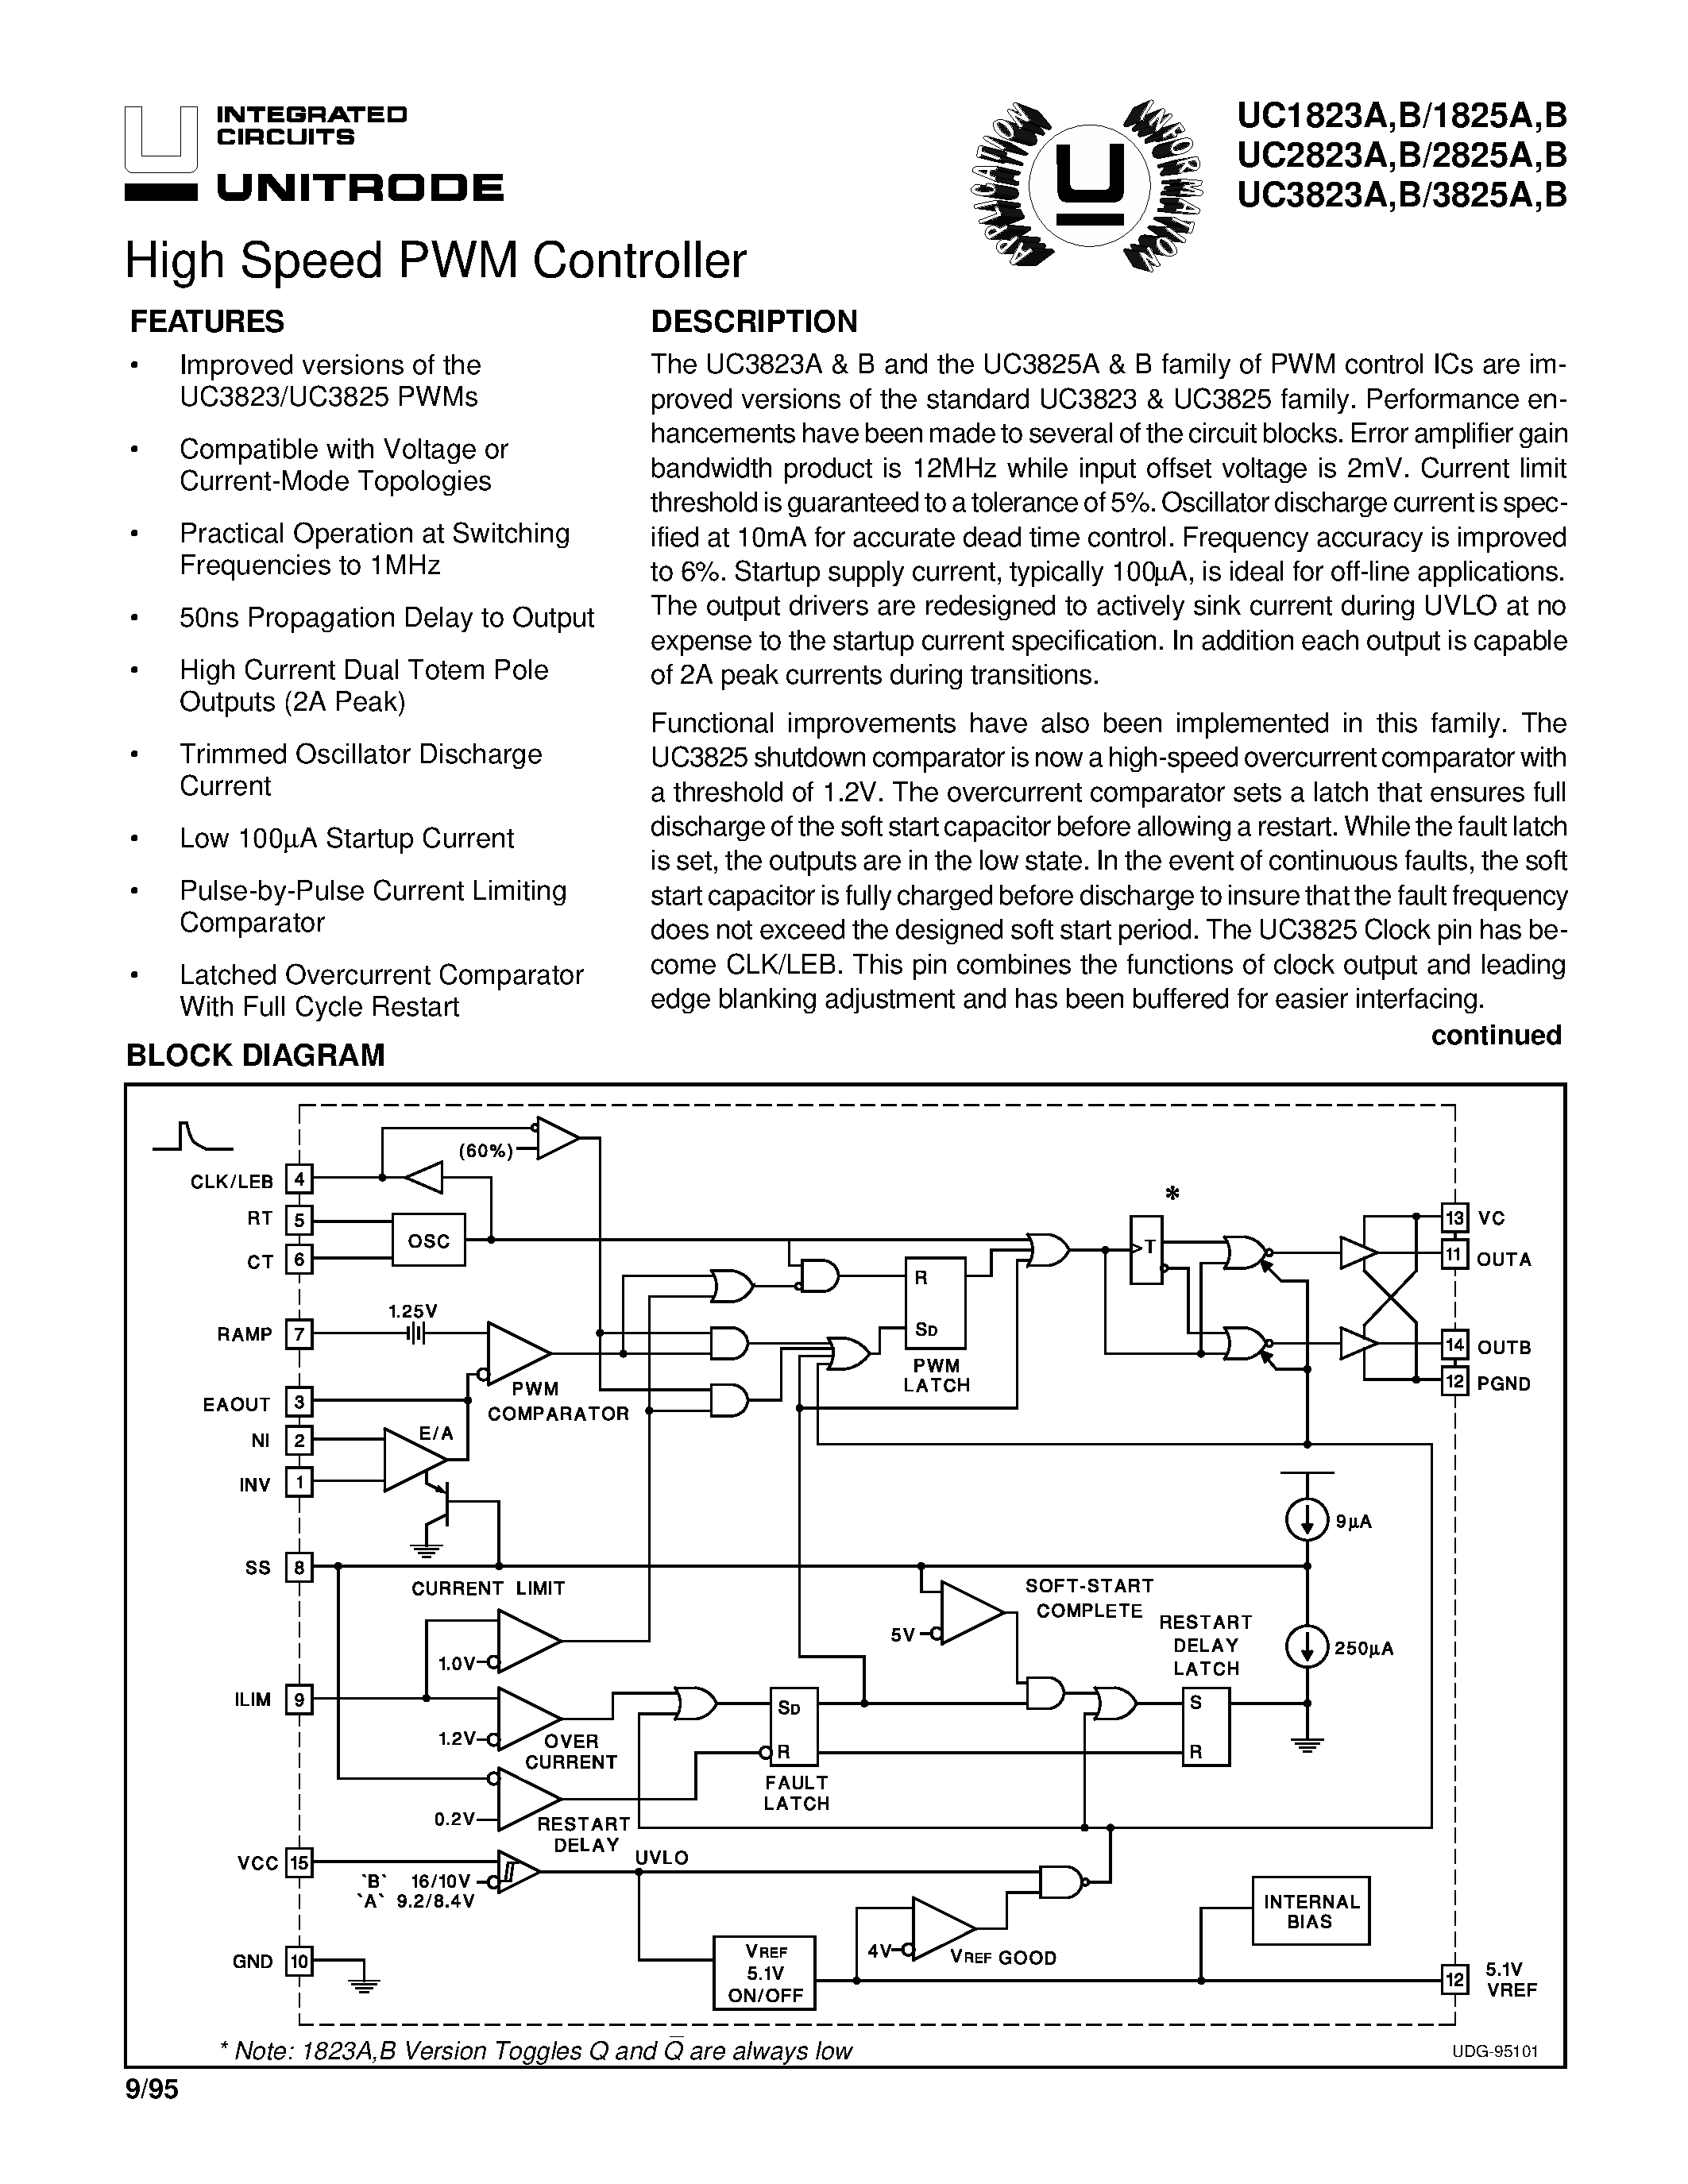 Datasheet UC2825B - High Speed PWM Controller page 1